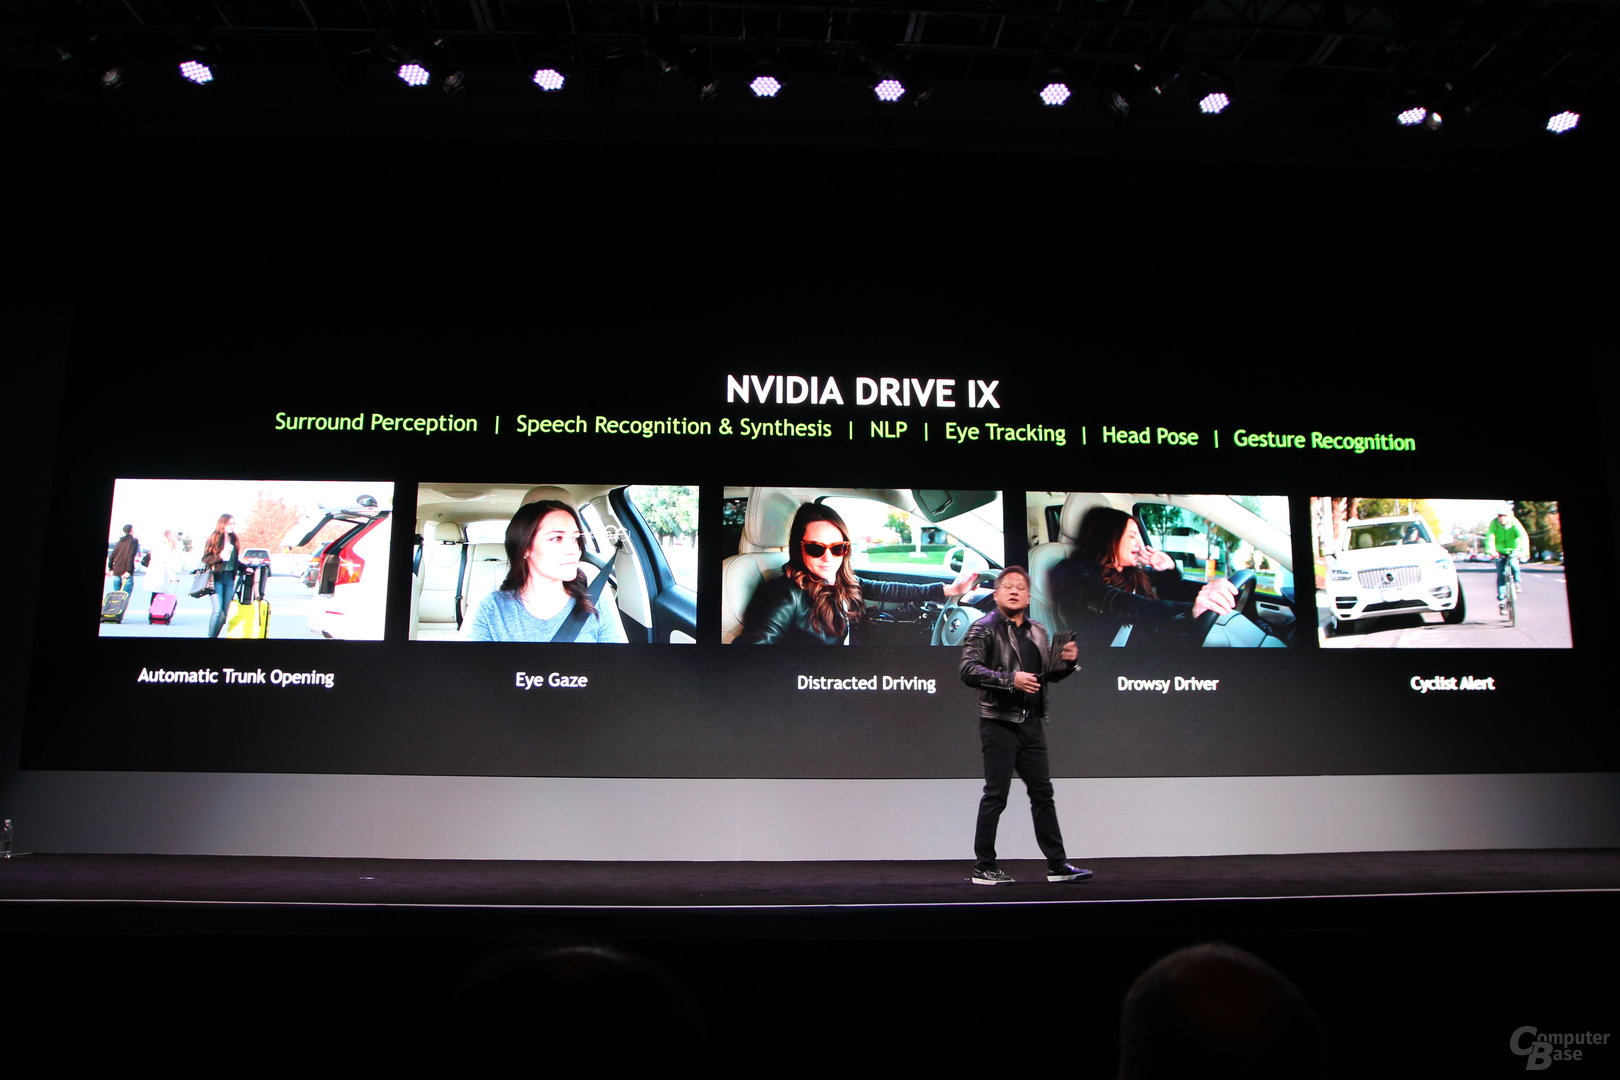 Nvidia Drive IX